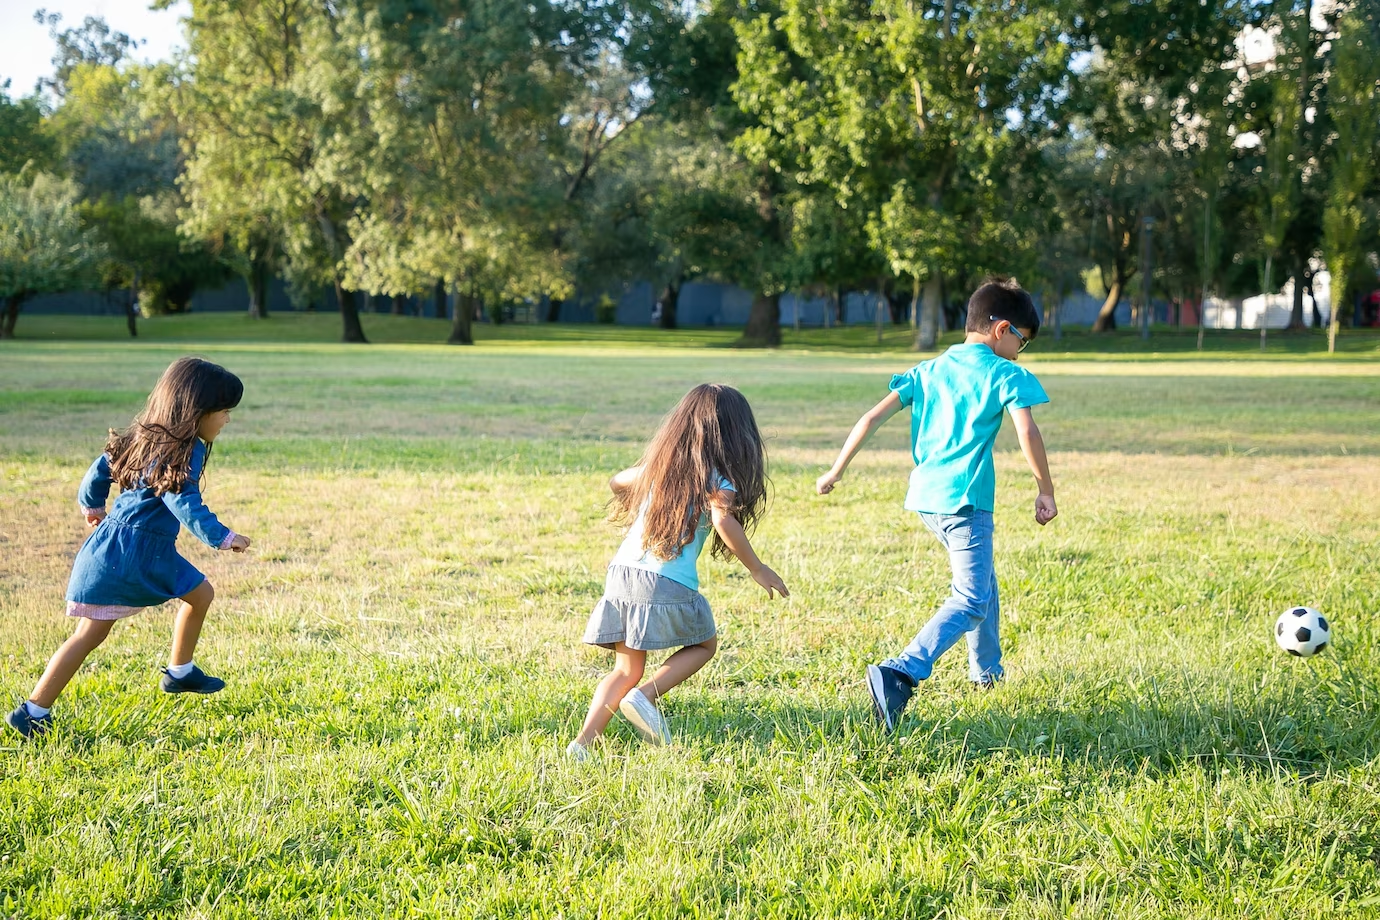 Включи я сбегу. Дети играют в футбол. Дети играют в футбол на траве. Дети в лагере играют в футбол. Дети бегут с мячиком по траве.